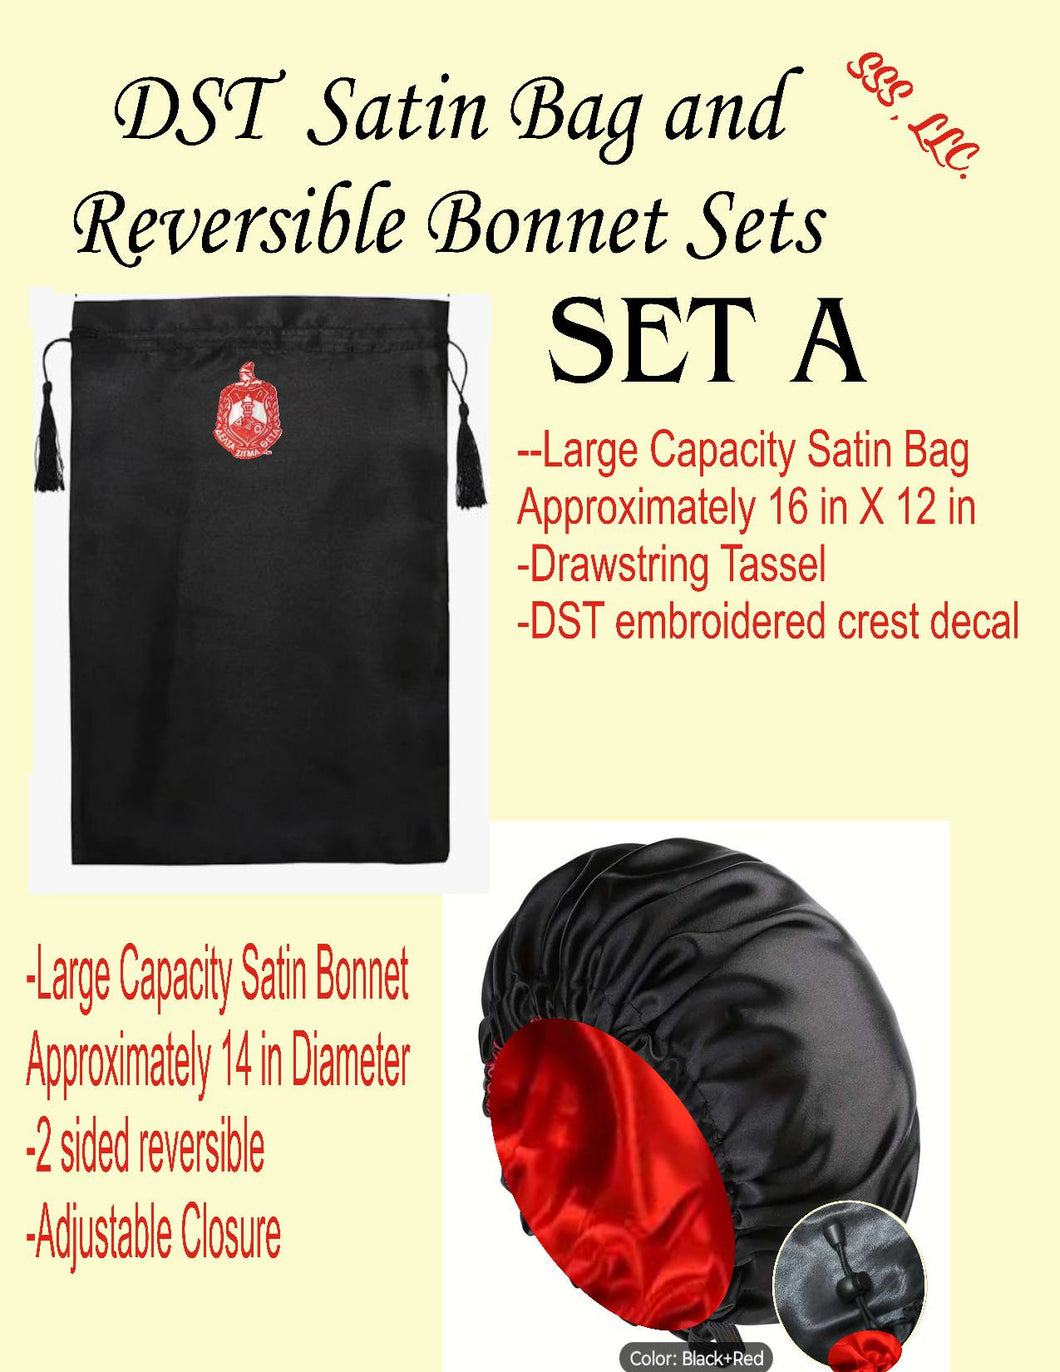 DST Satin Bag and Bonnet Set